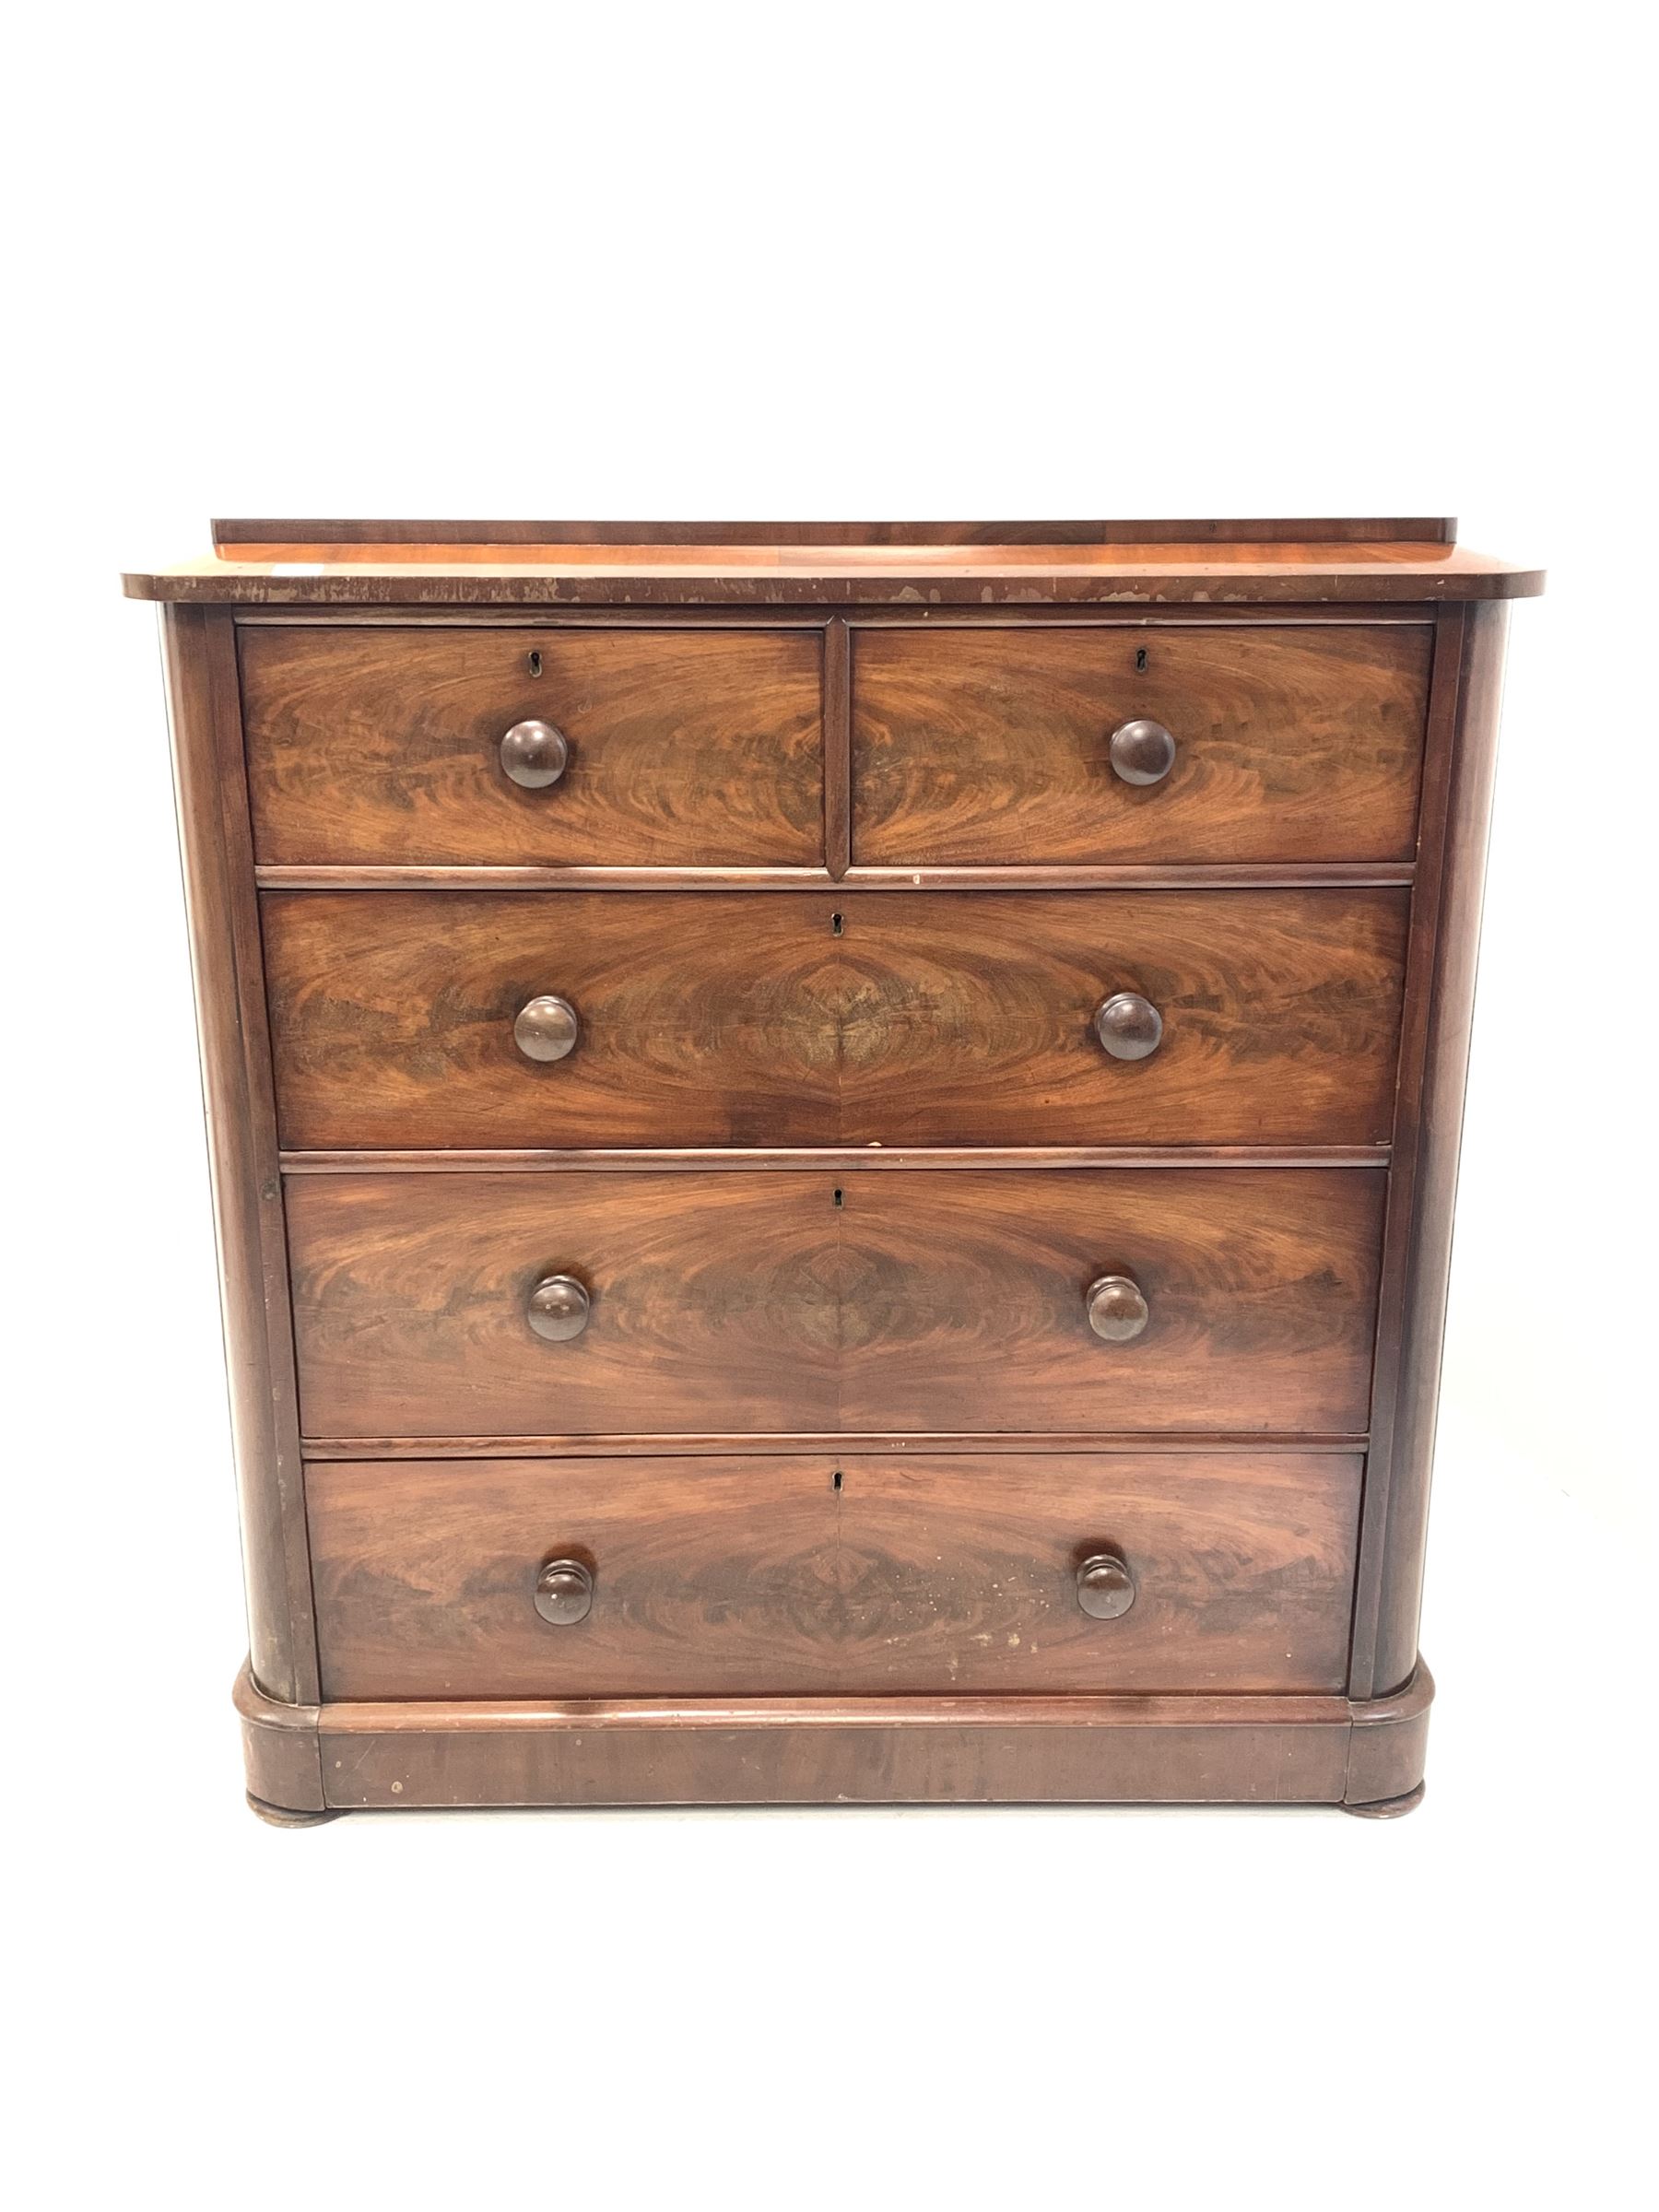 Victorian mahogany chest - Image 2 of 4